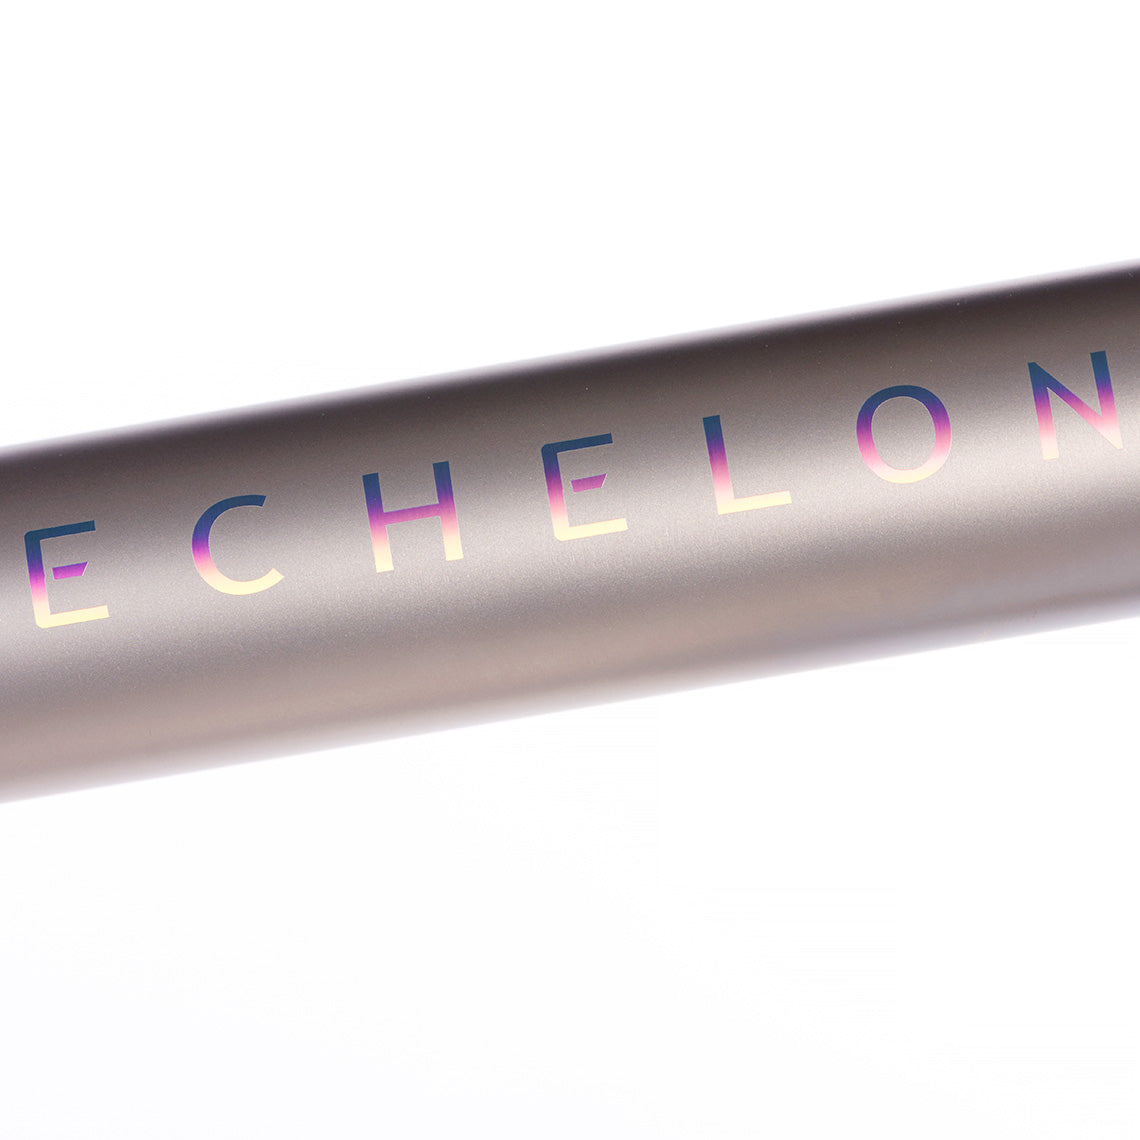 Echelon - Signature